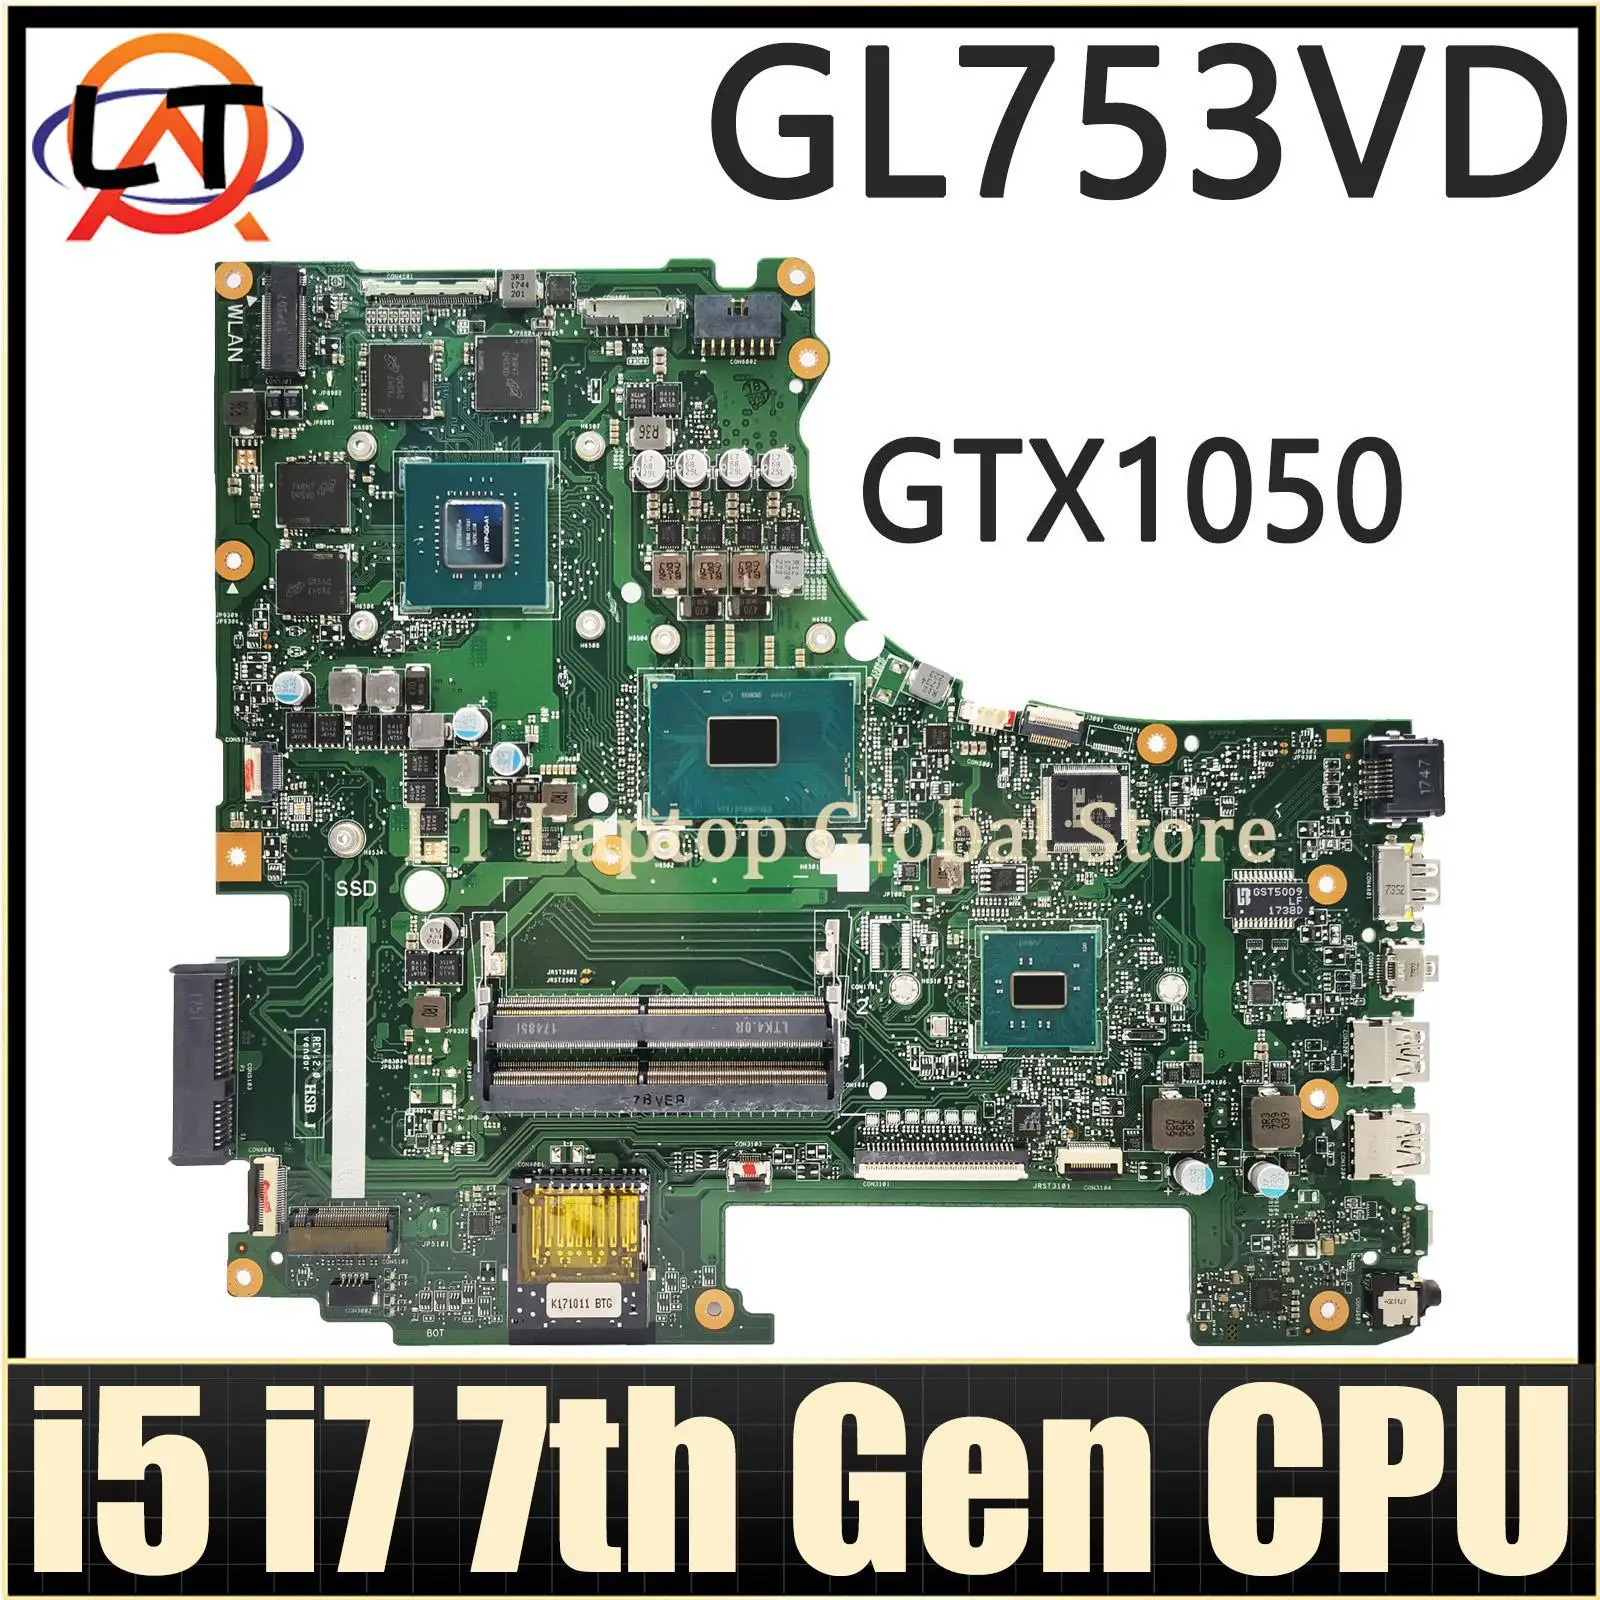 

GL753VD Mainboard For ROG GL753VE FX753V ZX753V GL753V GL753 Laptop Motherboard CPU i5 i7 7th Gen GPU GTX1050 DDR4